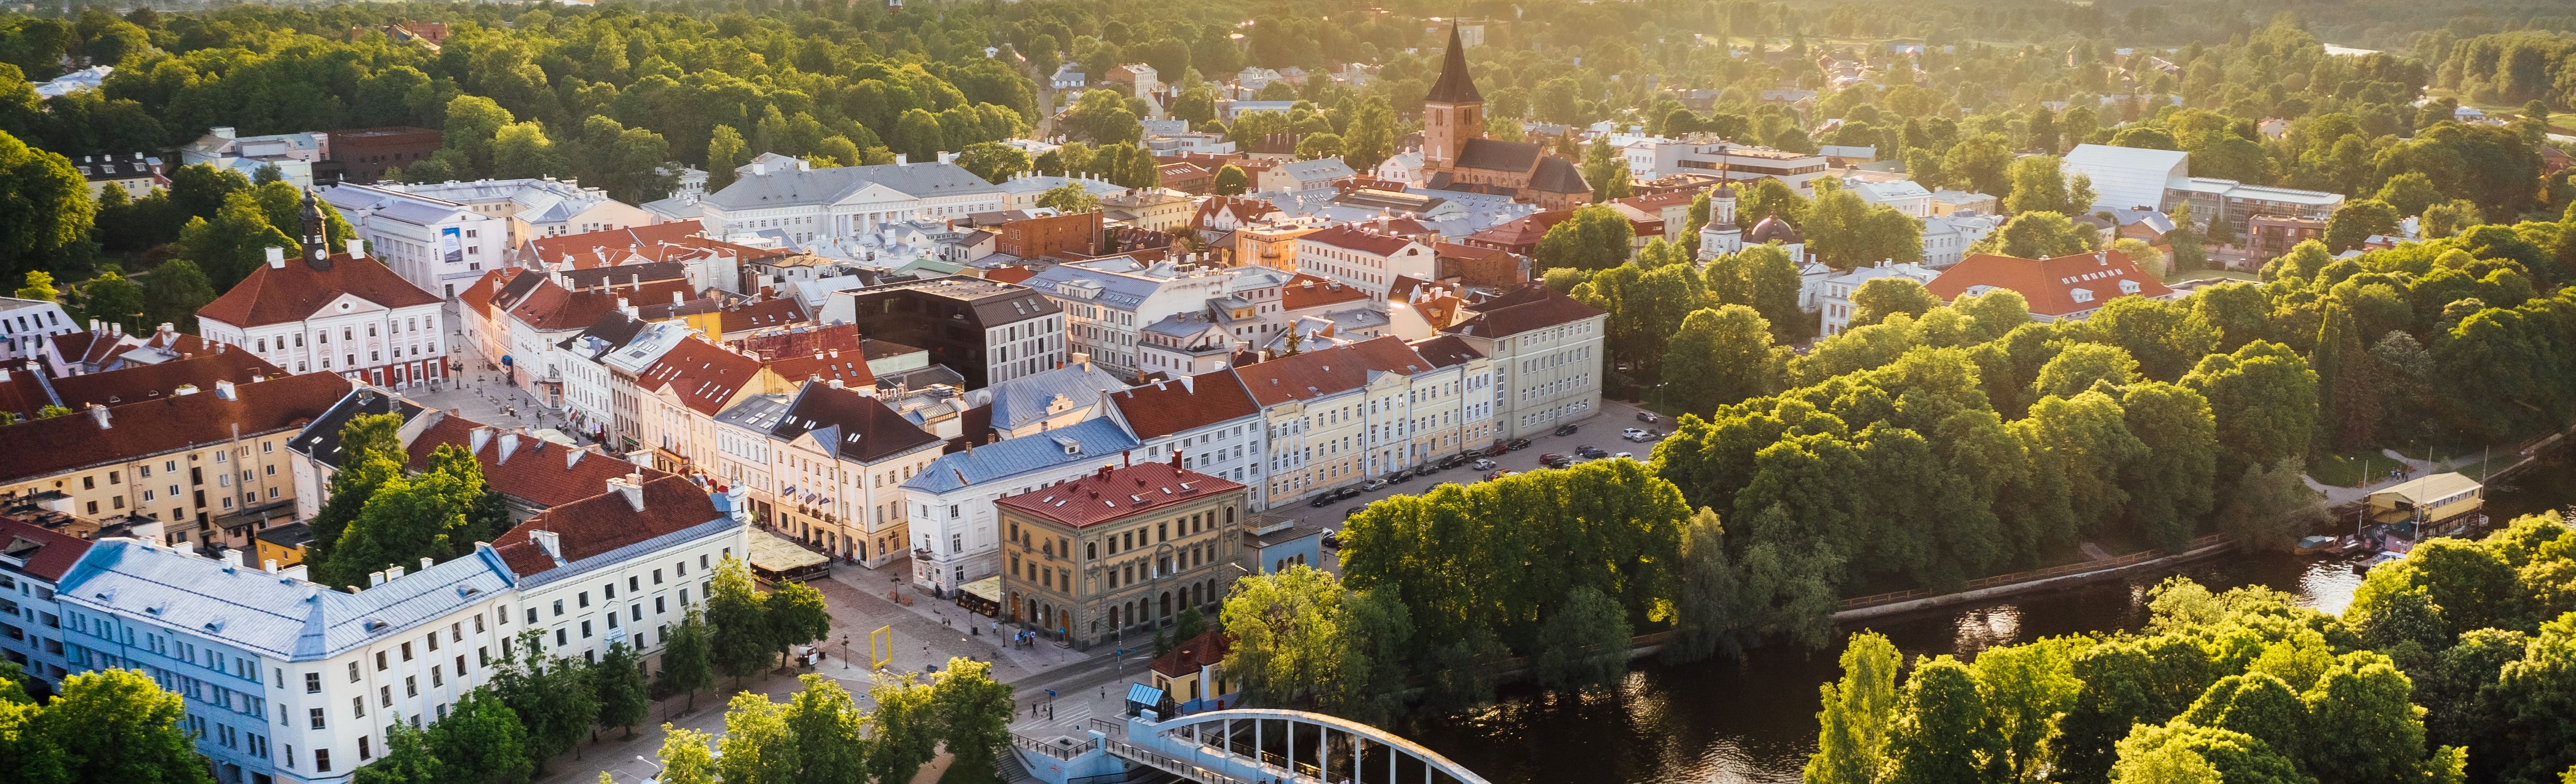 City of Tartu view